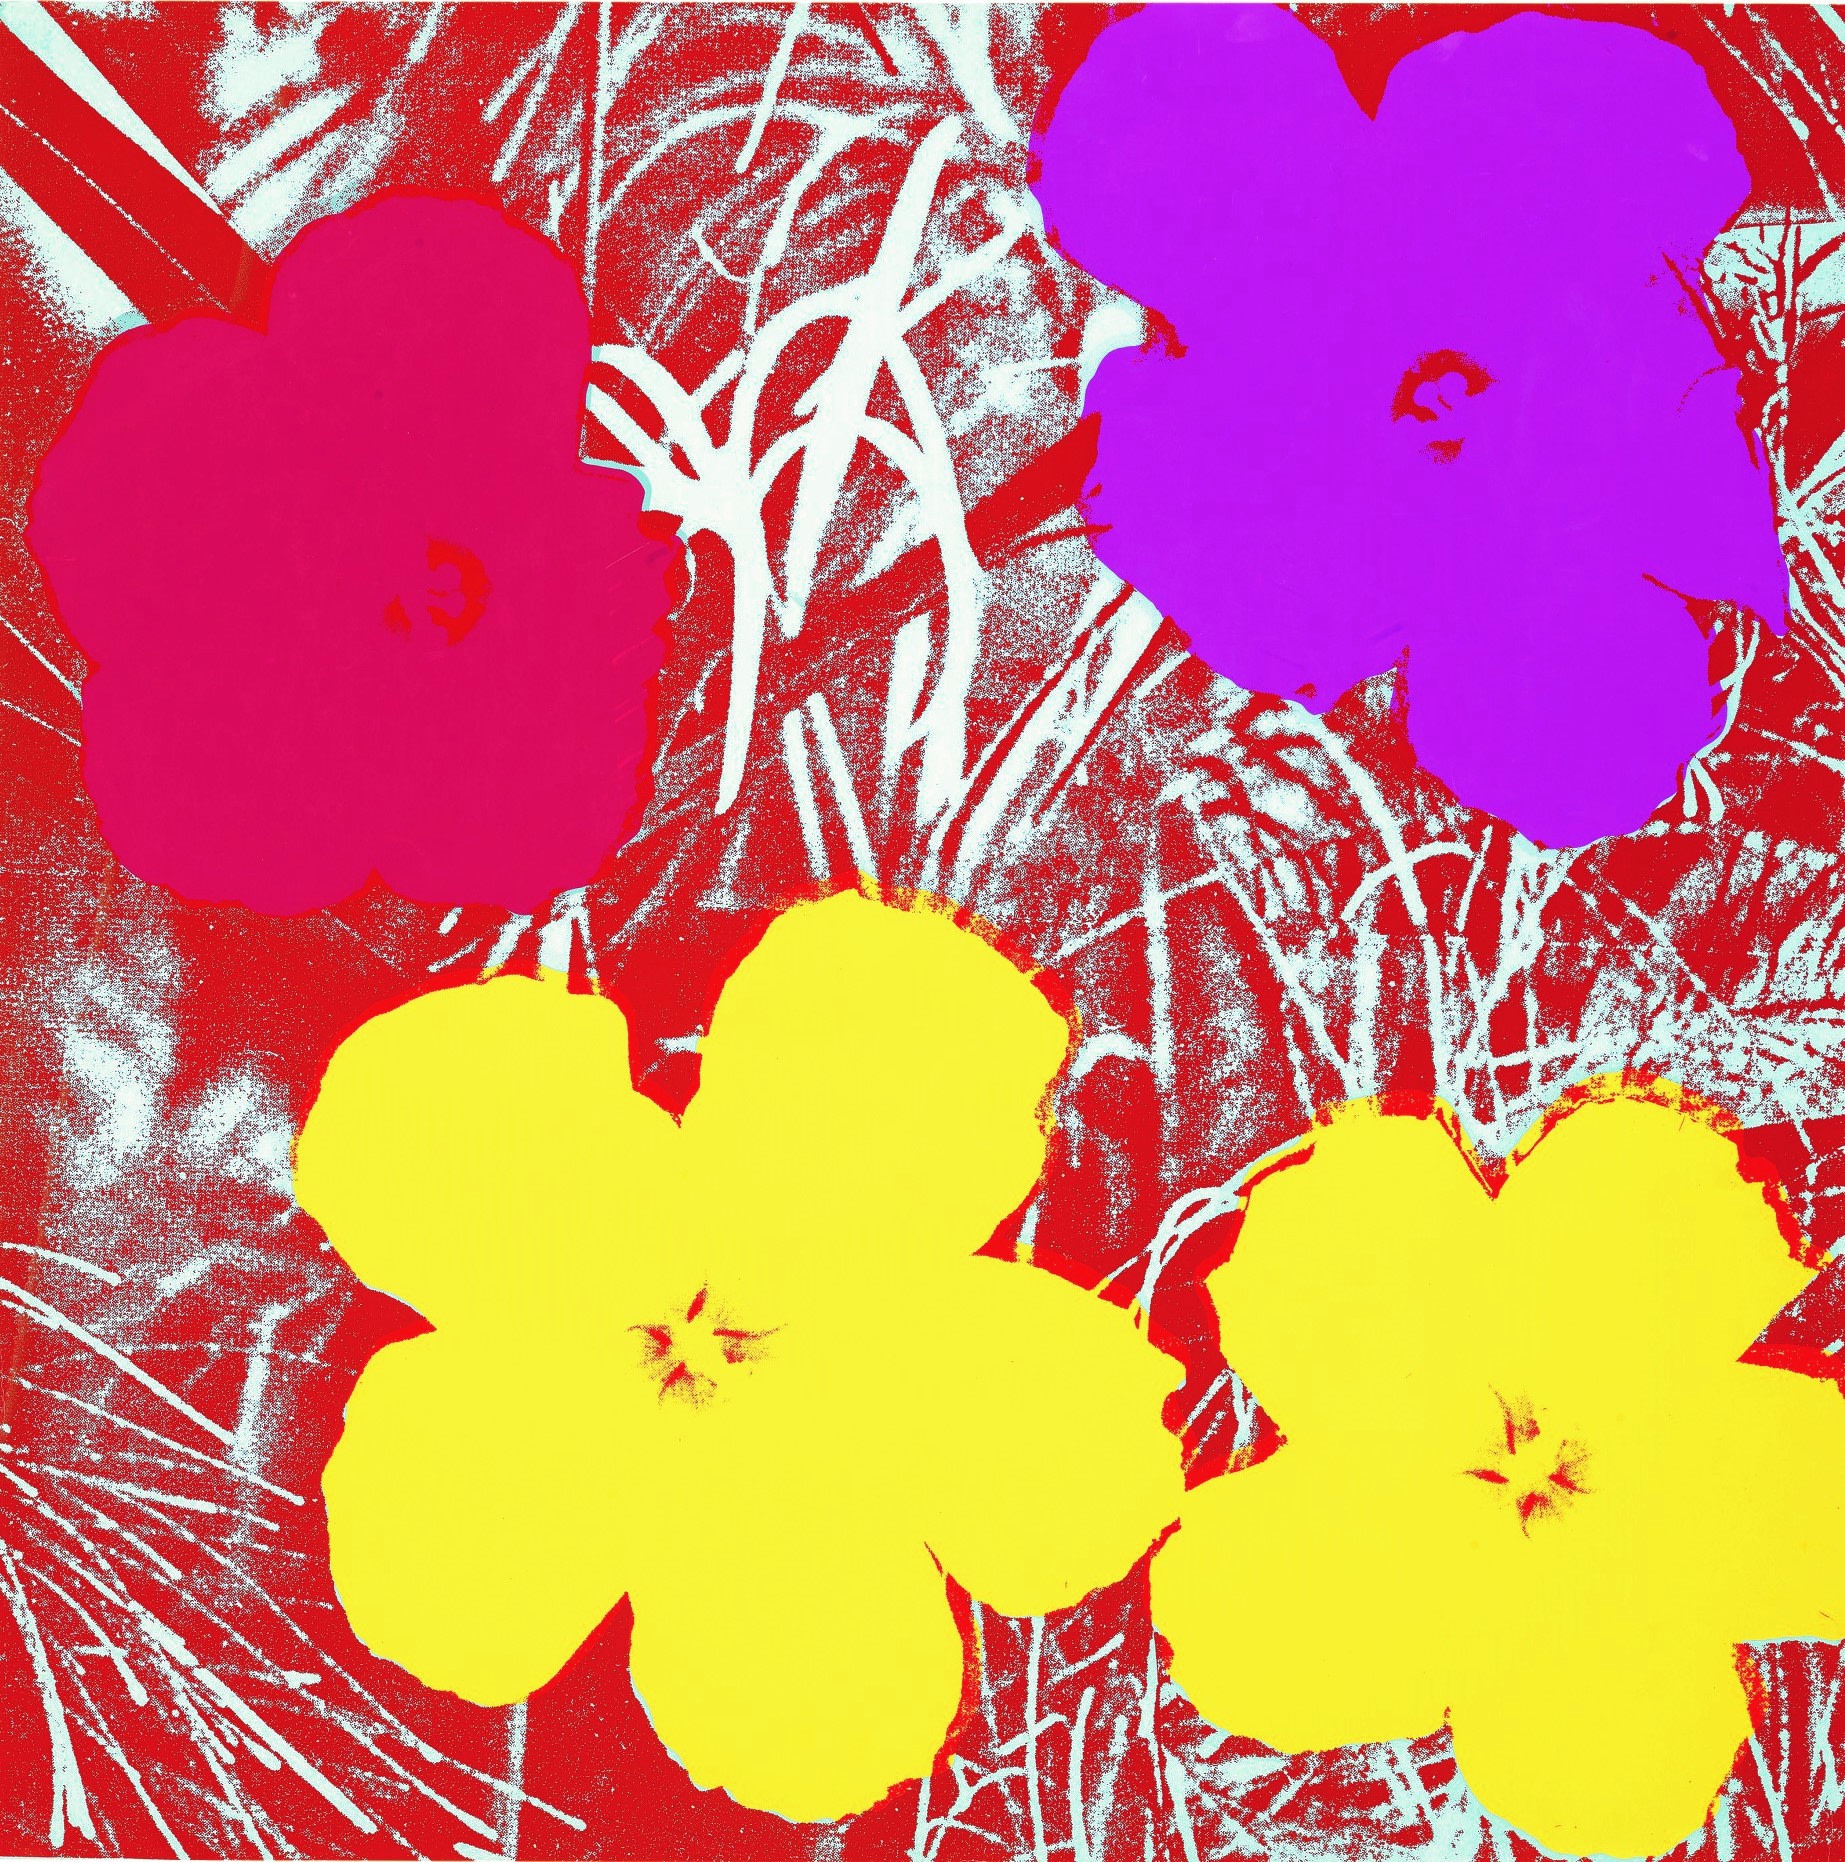 Andy Warhol Flowers (FS.II.71)